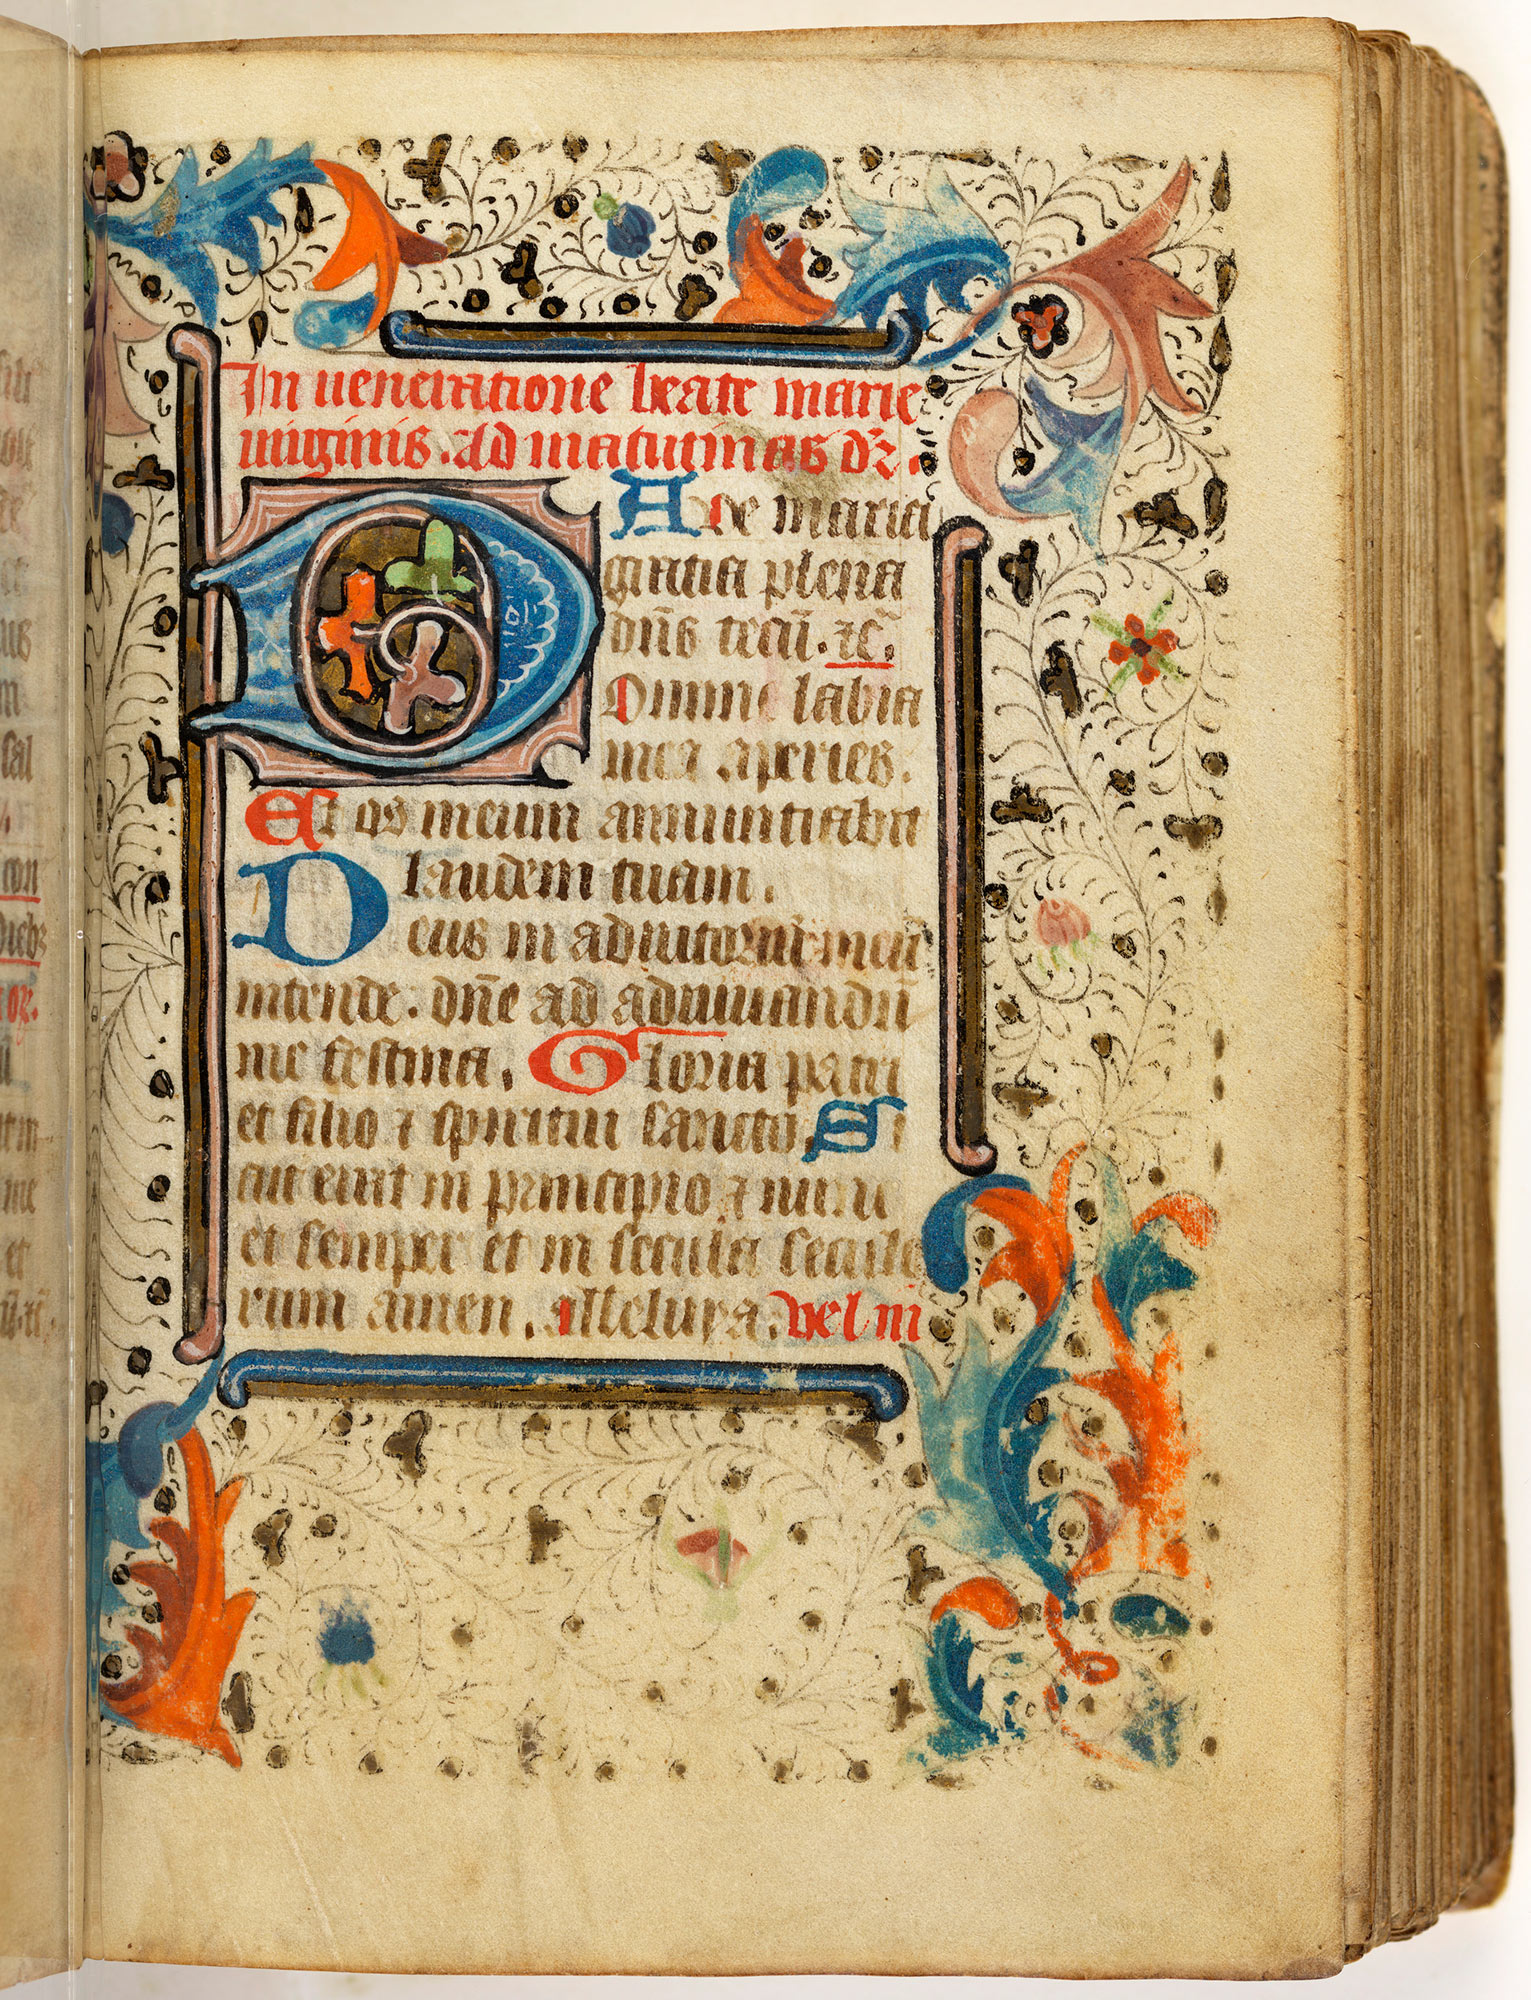 An illuminated manuscript.